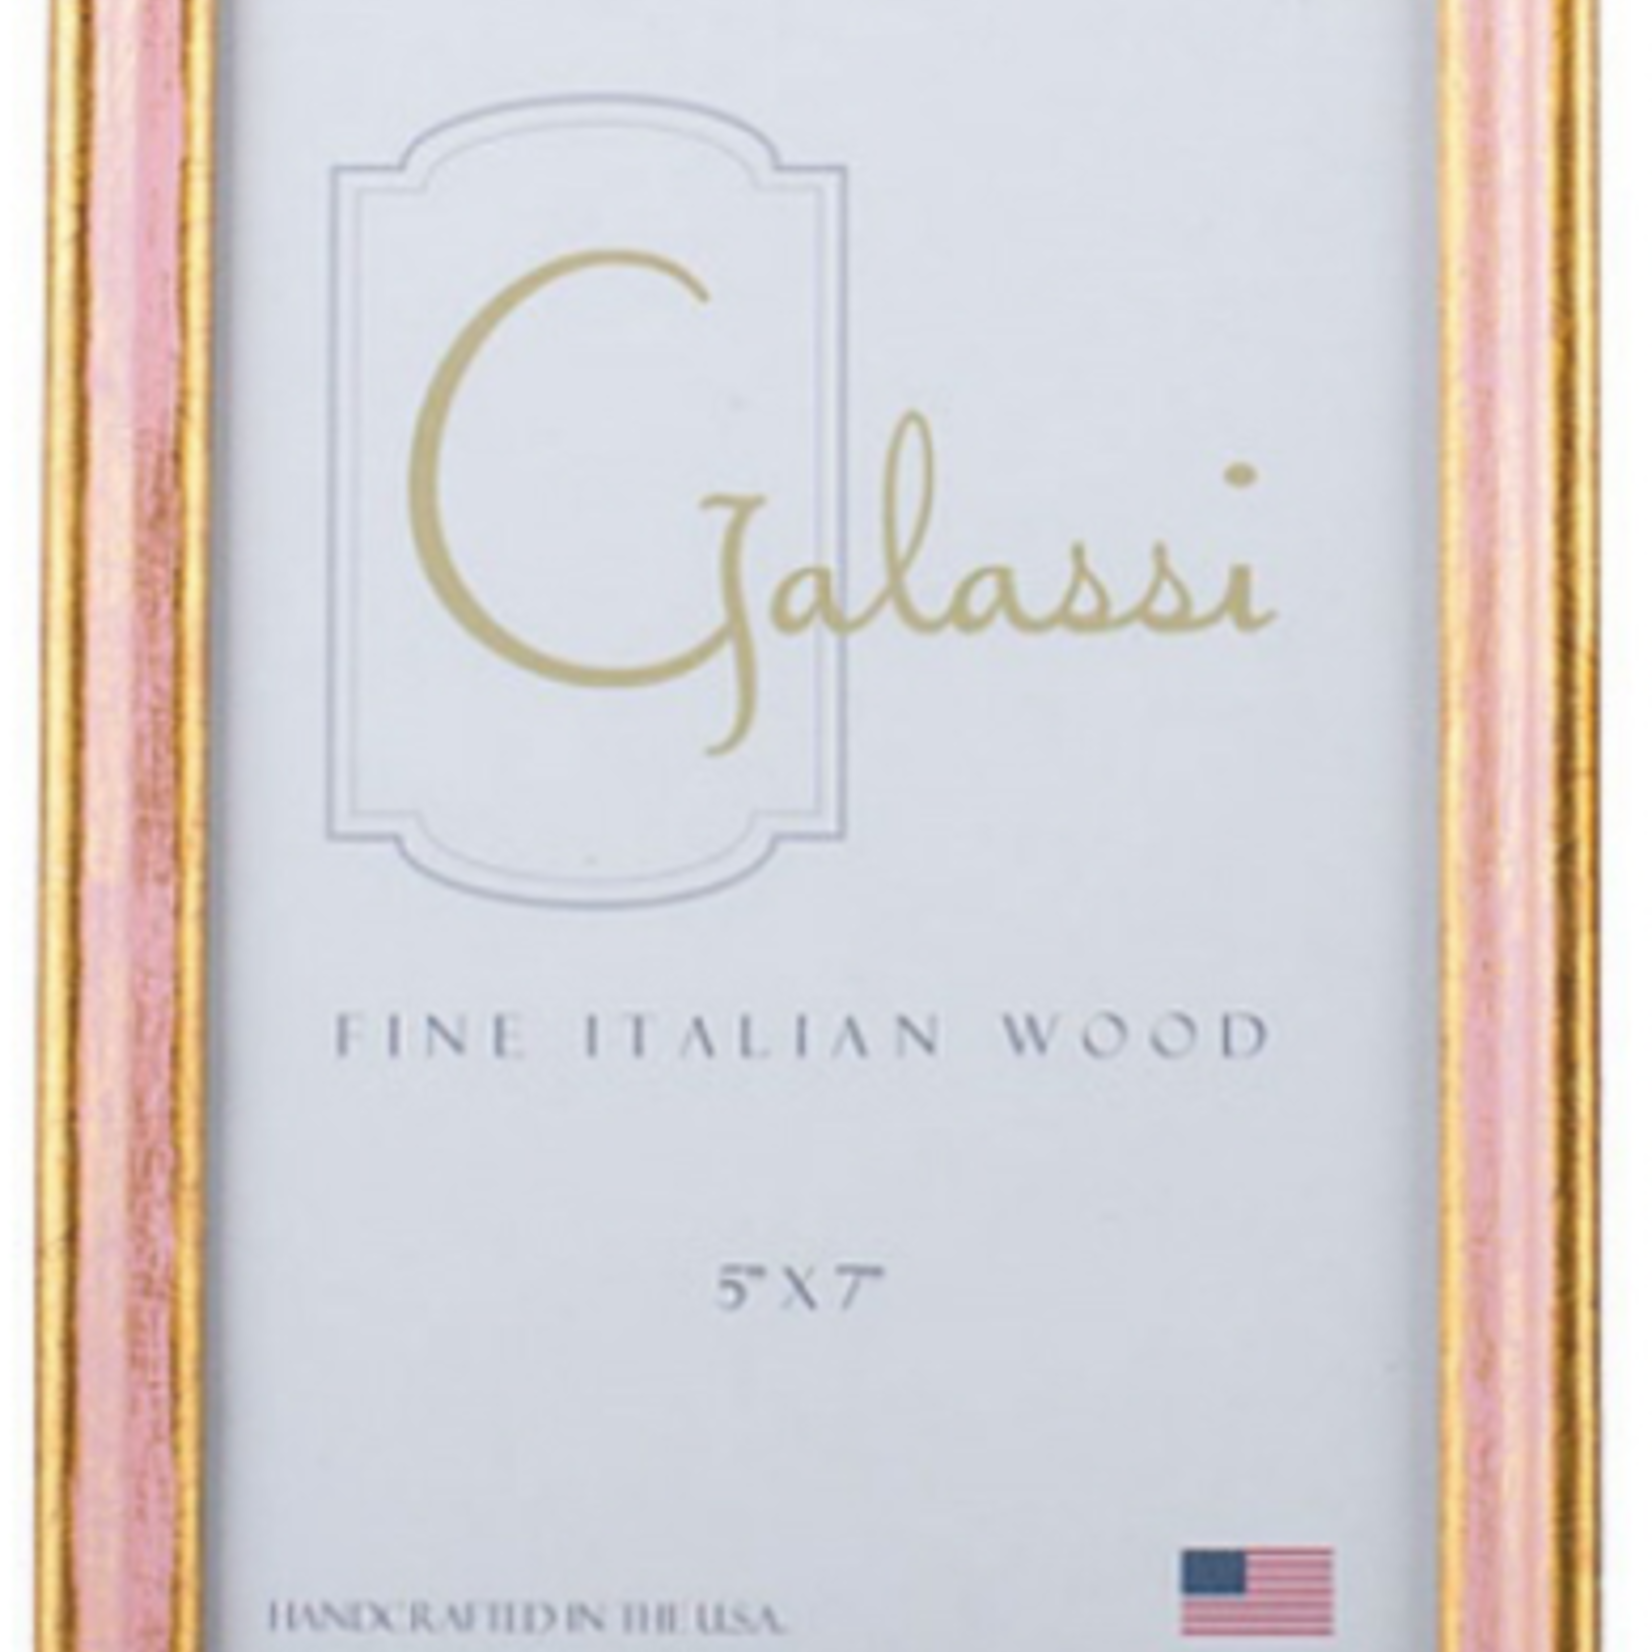 Galassi 5x7 Blue/Gold Florentine Frame